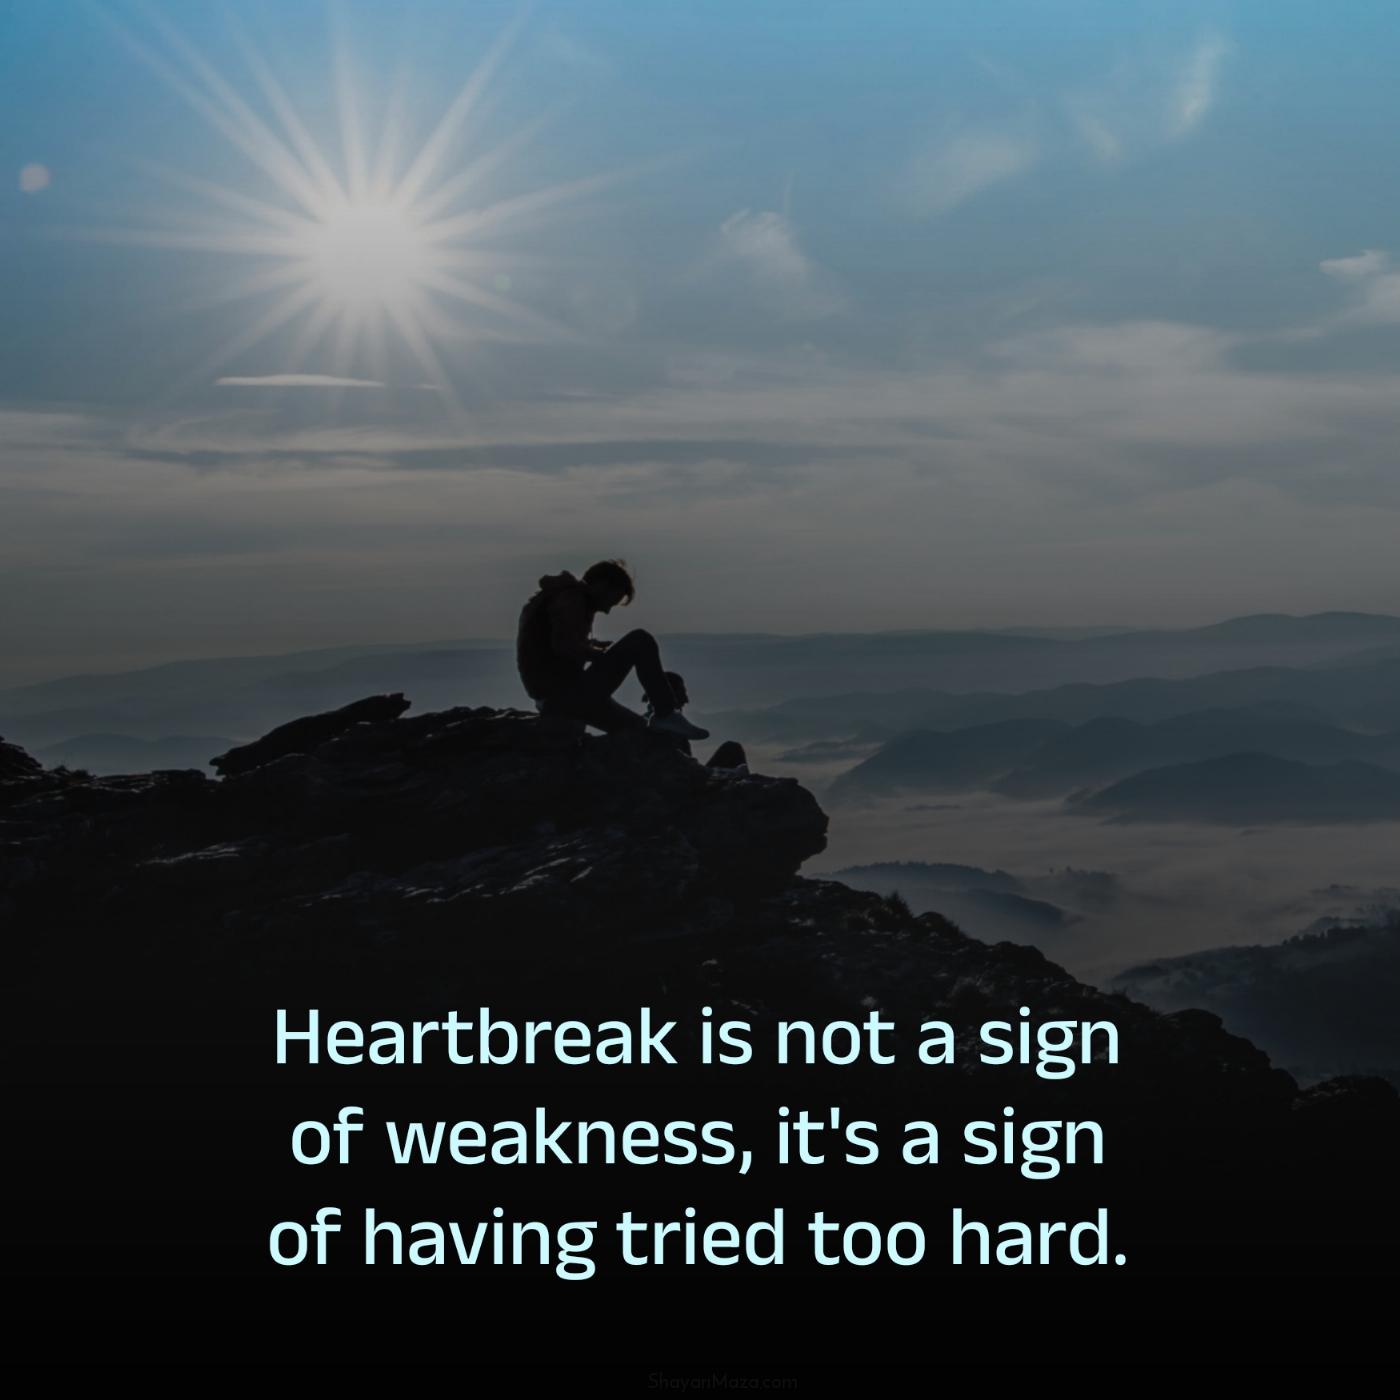 Heartbreak is not a sign of weakness it's a sign of having tried